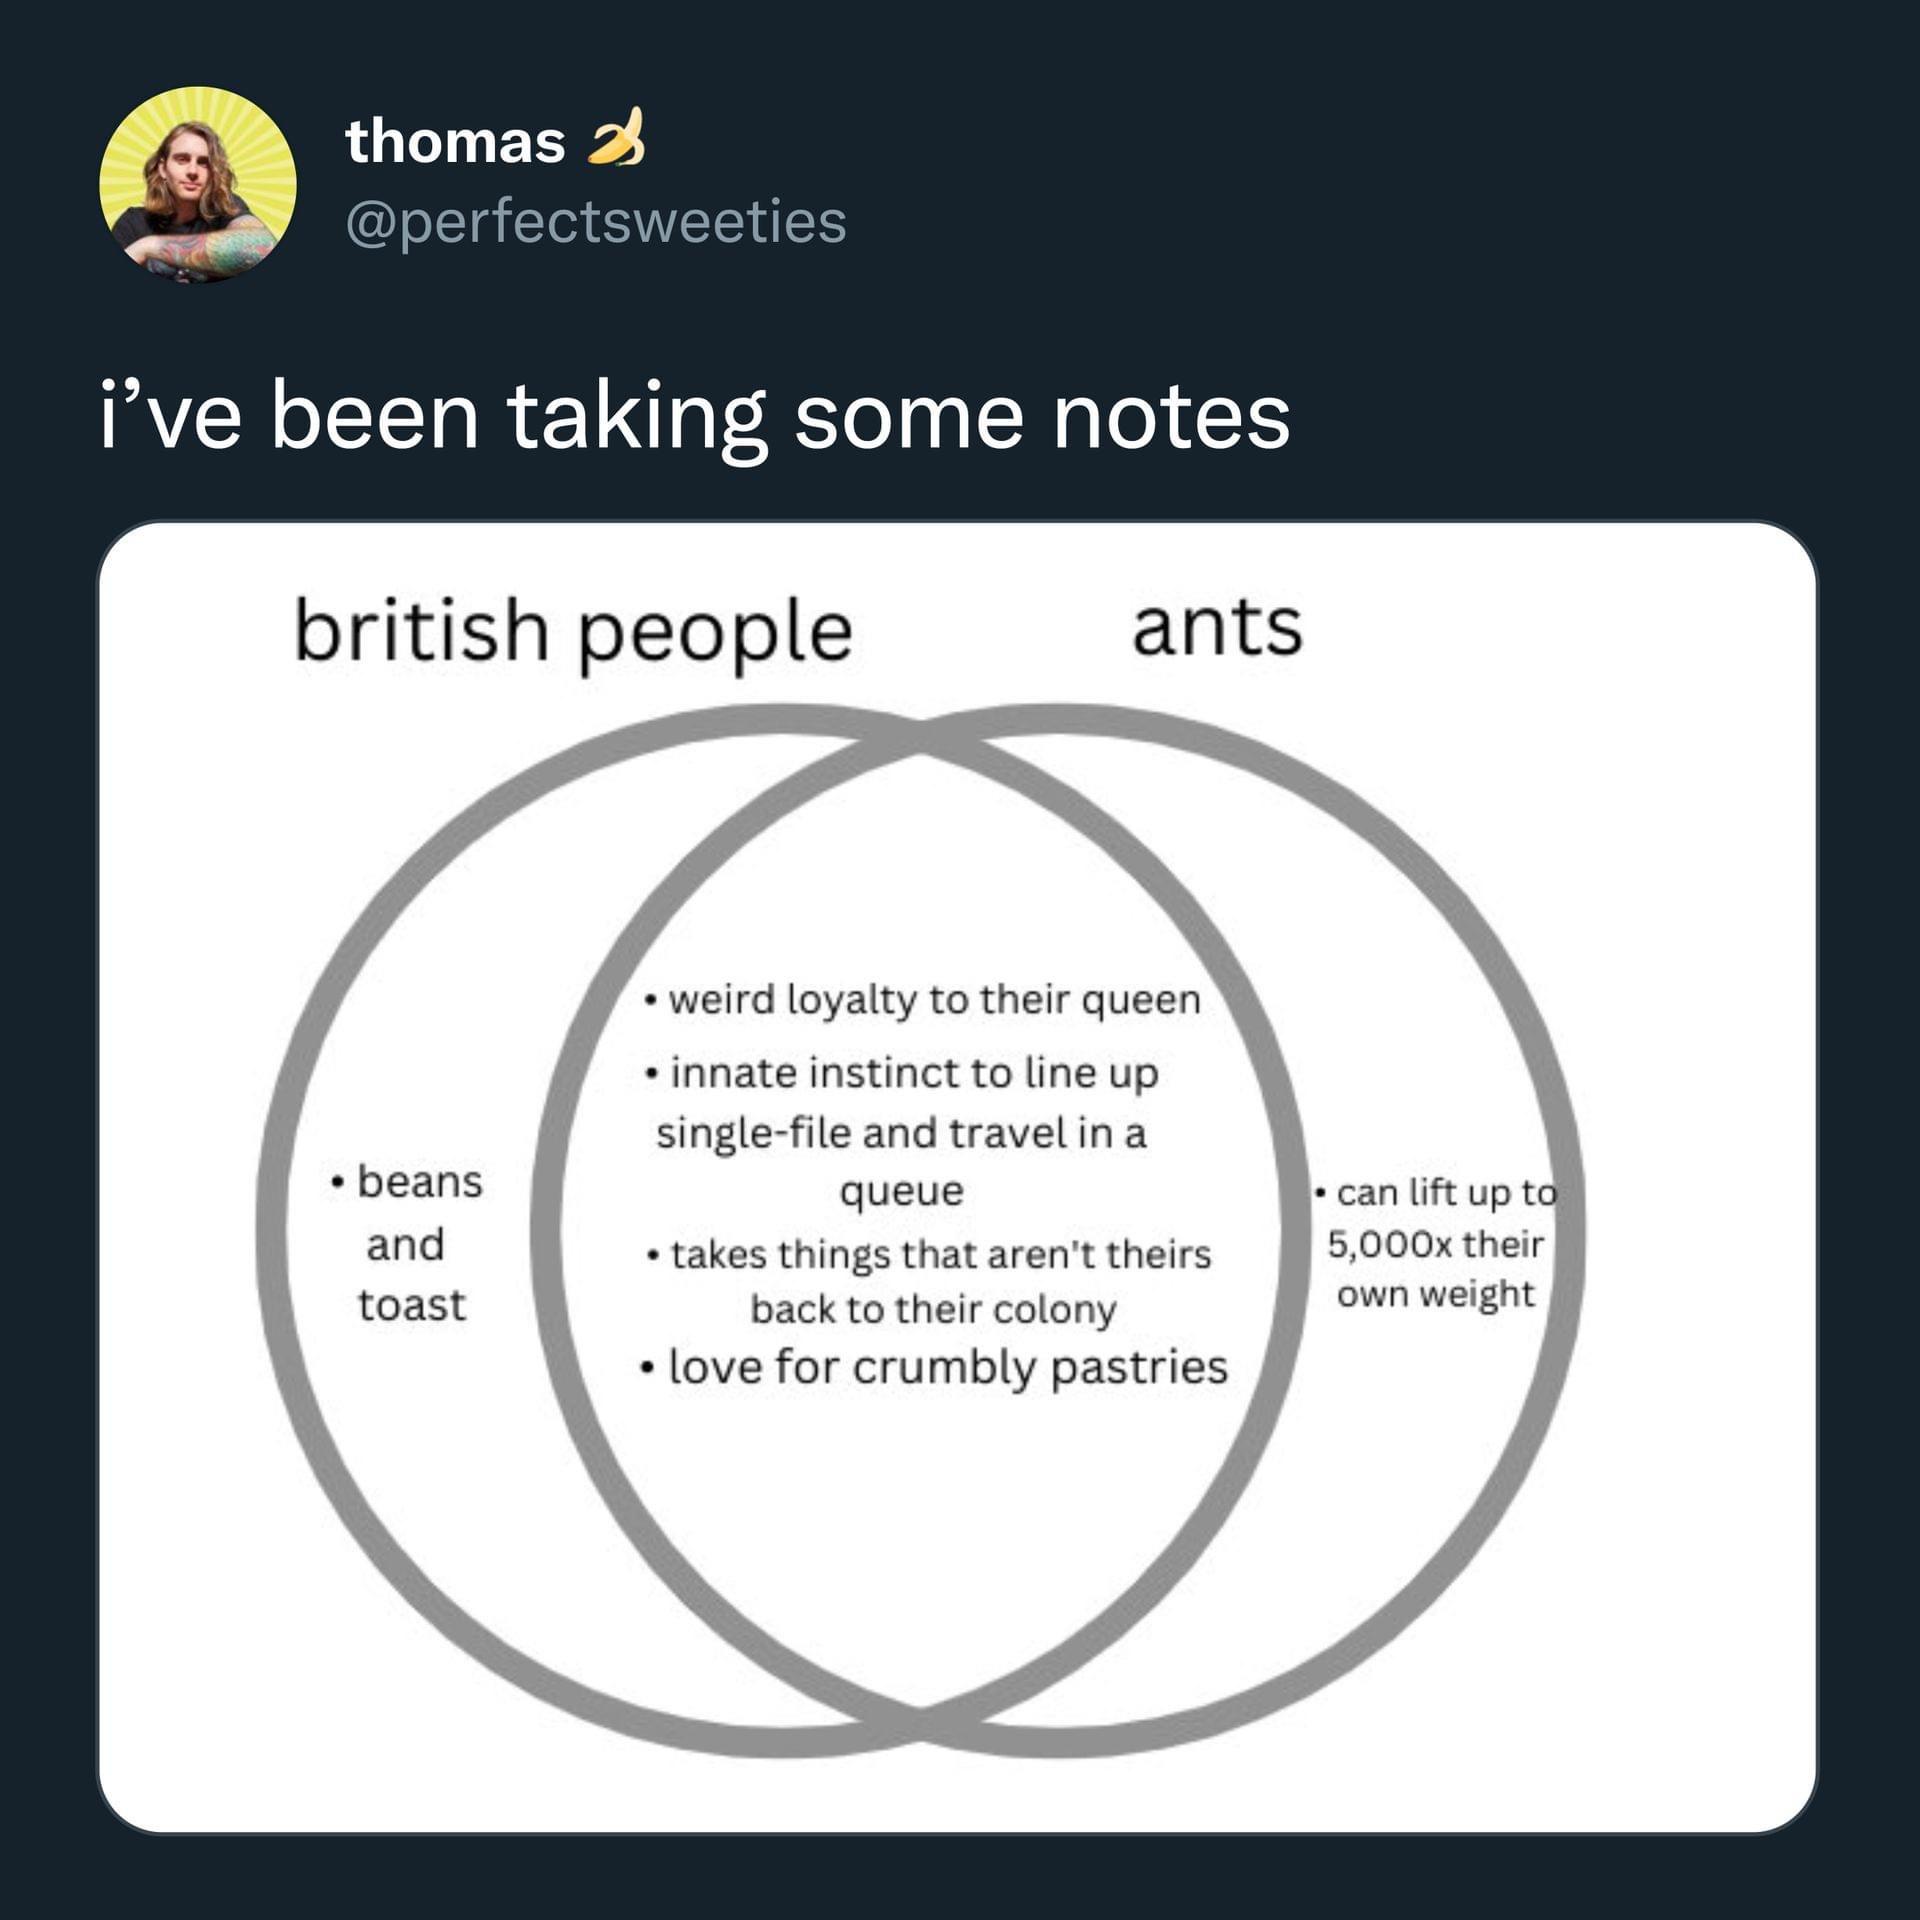 are+british+peoples+secretly+ants%3F